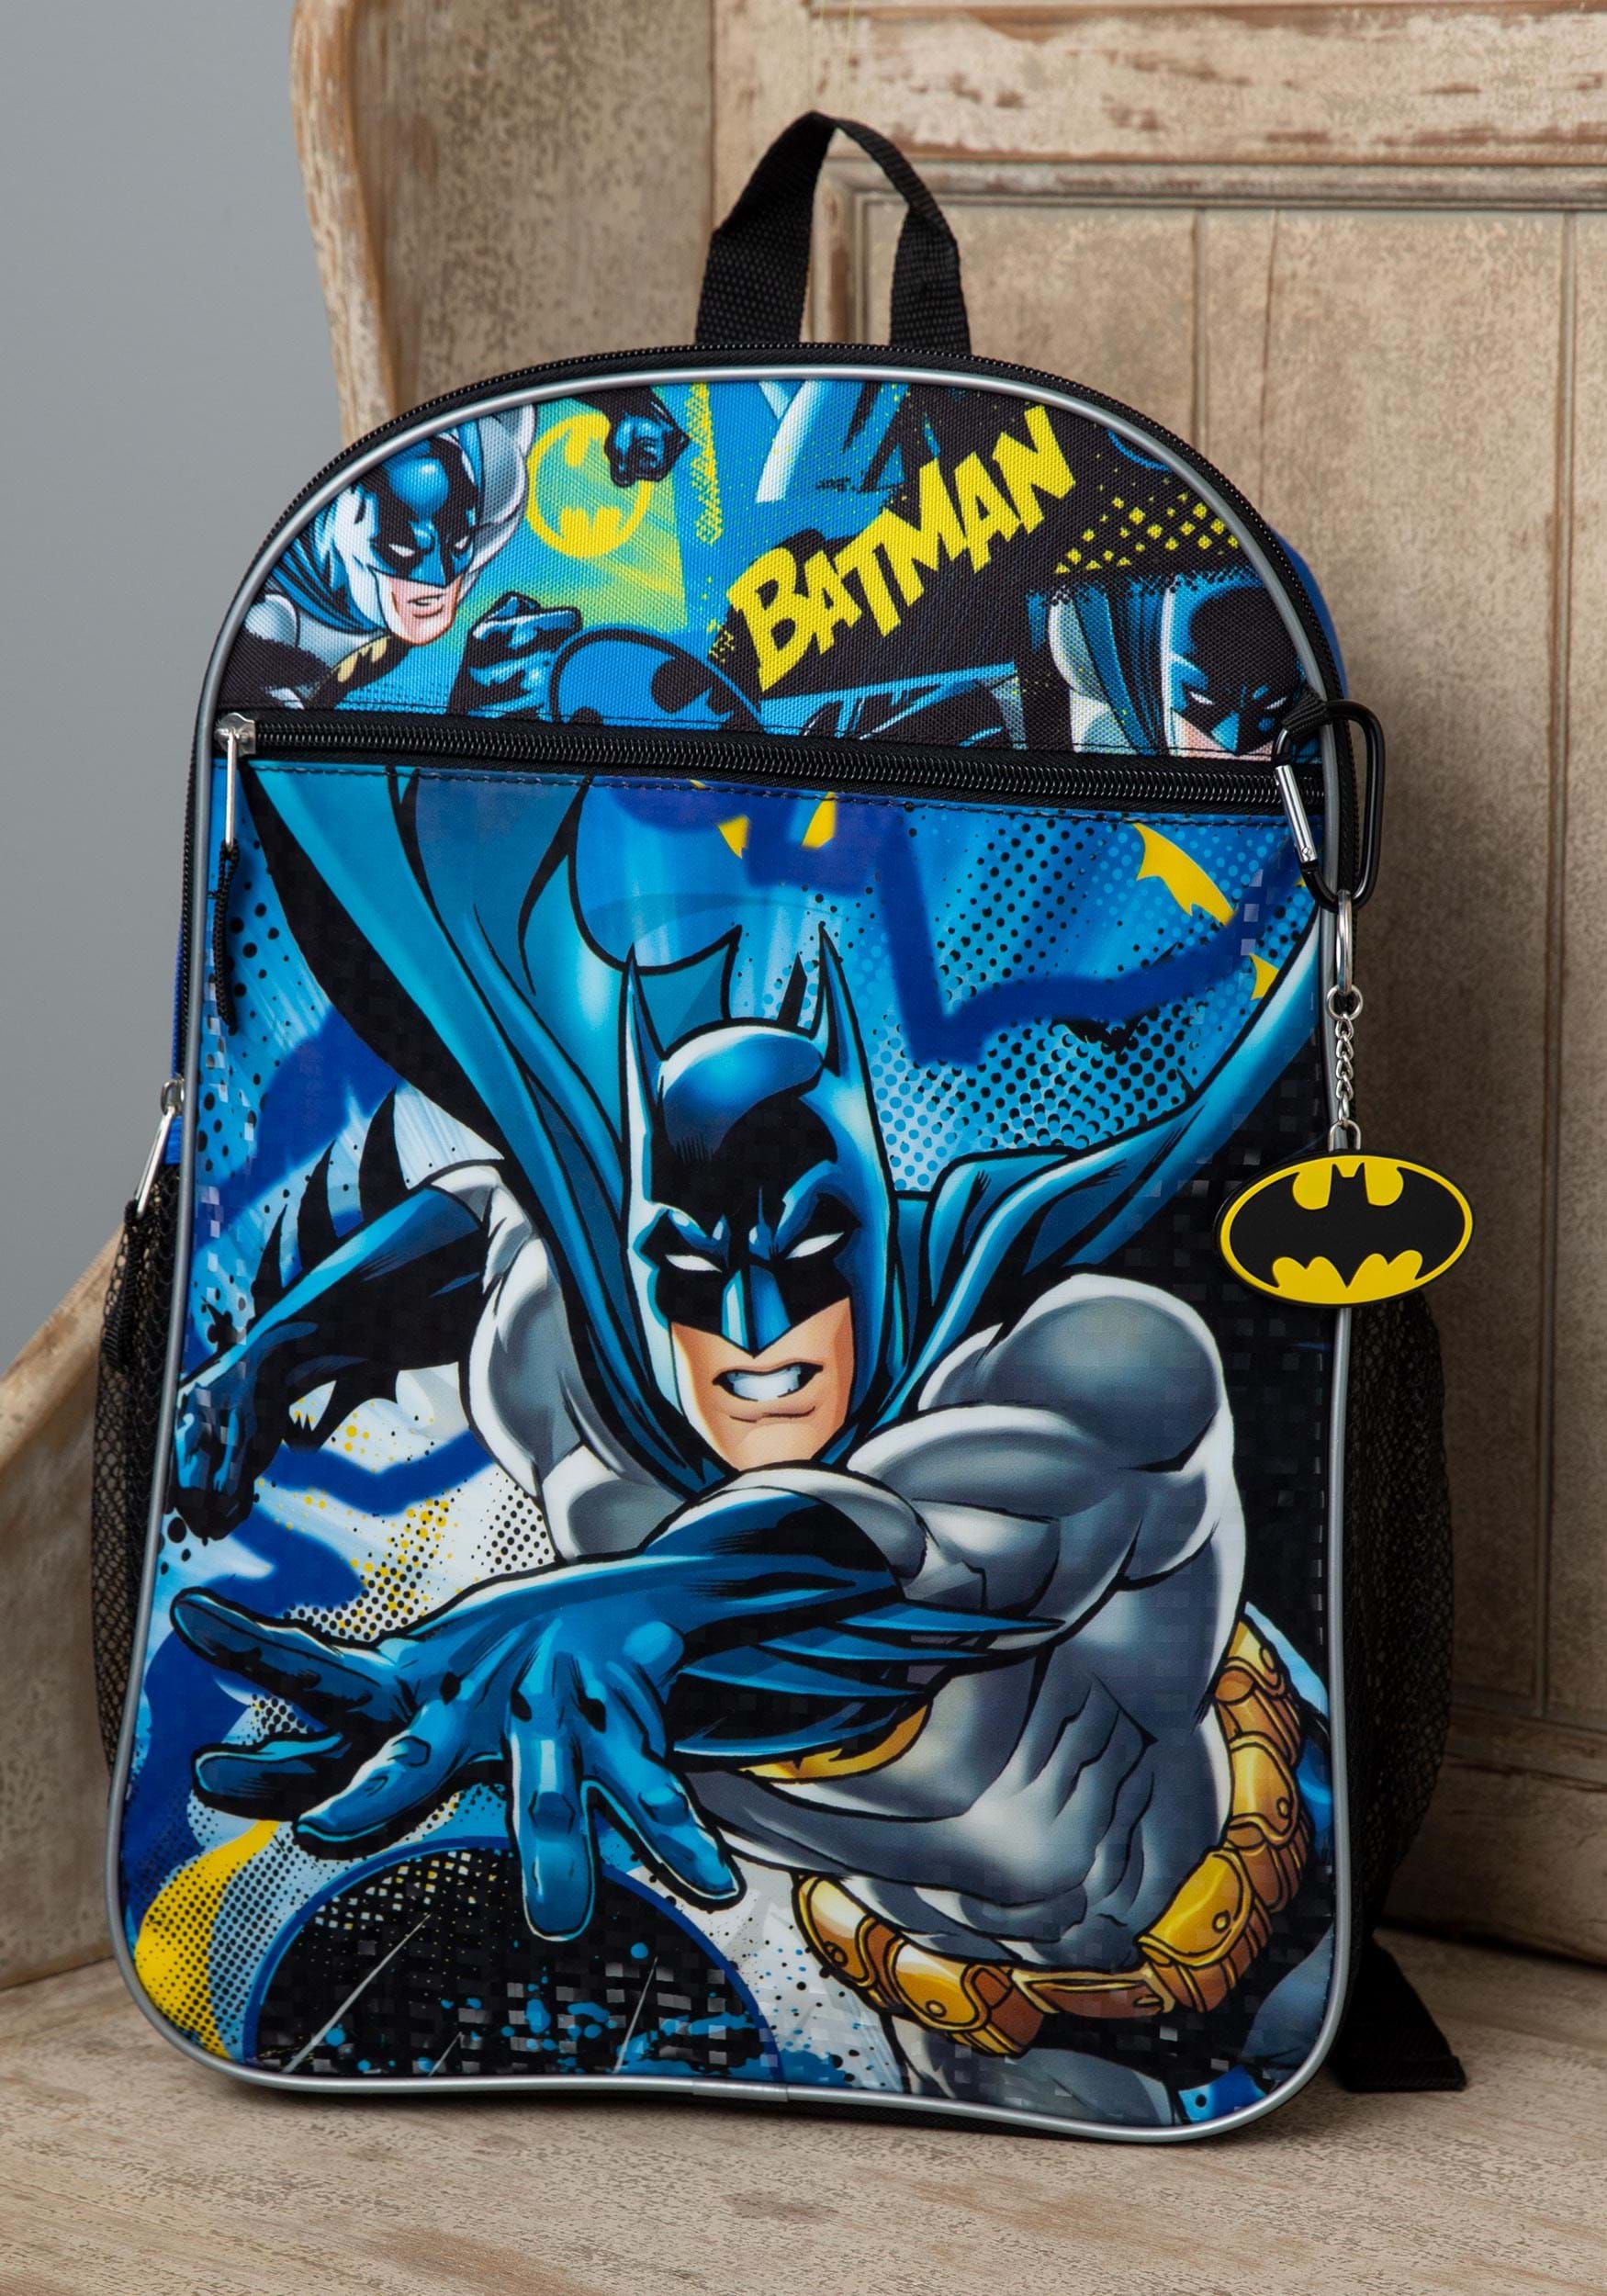 5 pc Batman/Batgirl Backpack Set